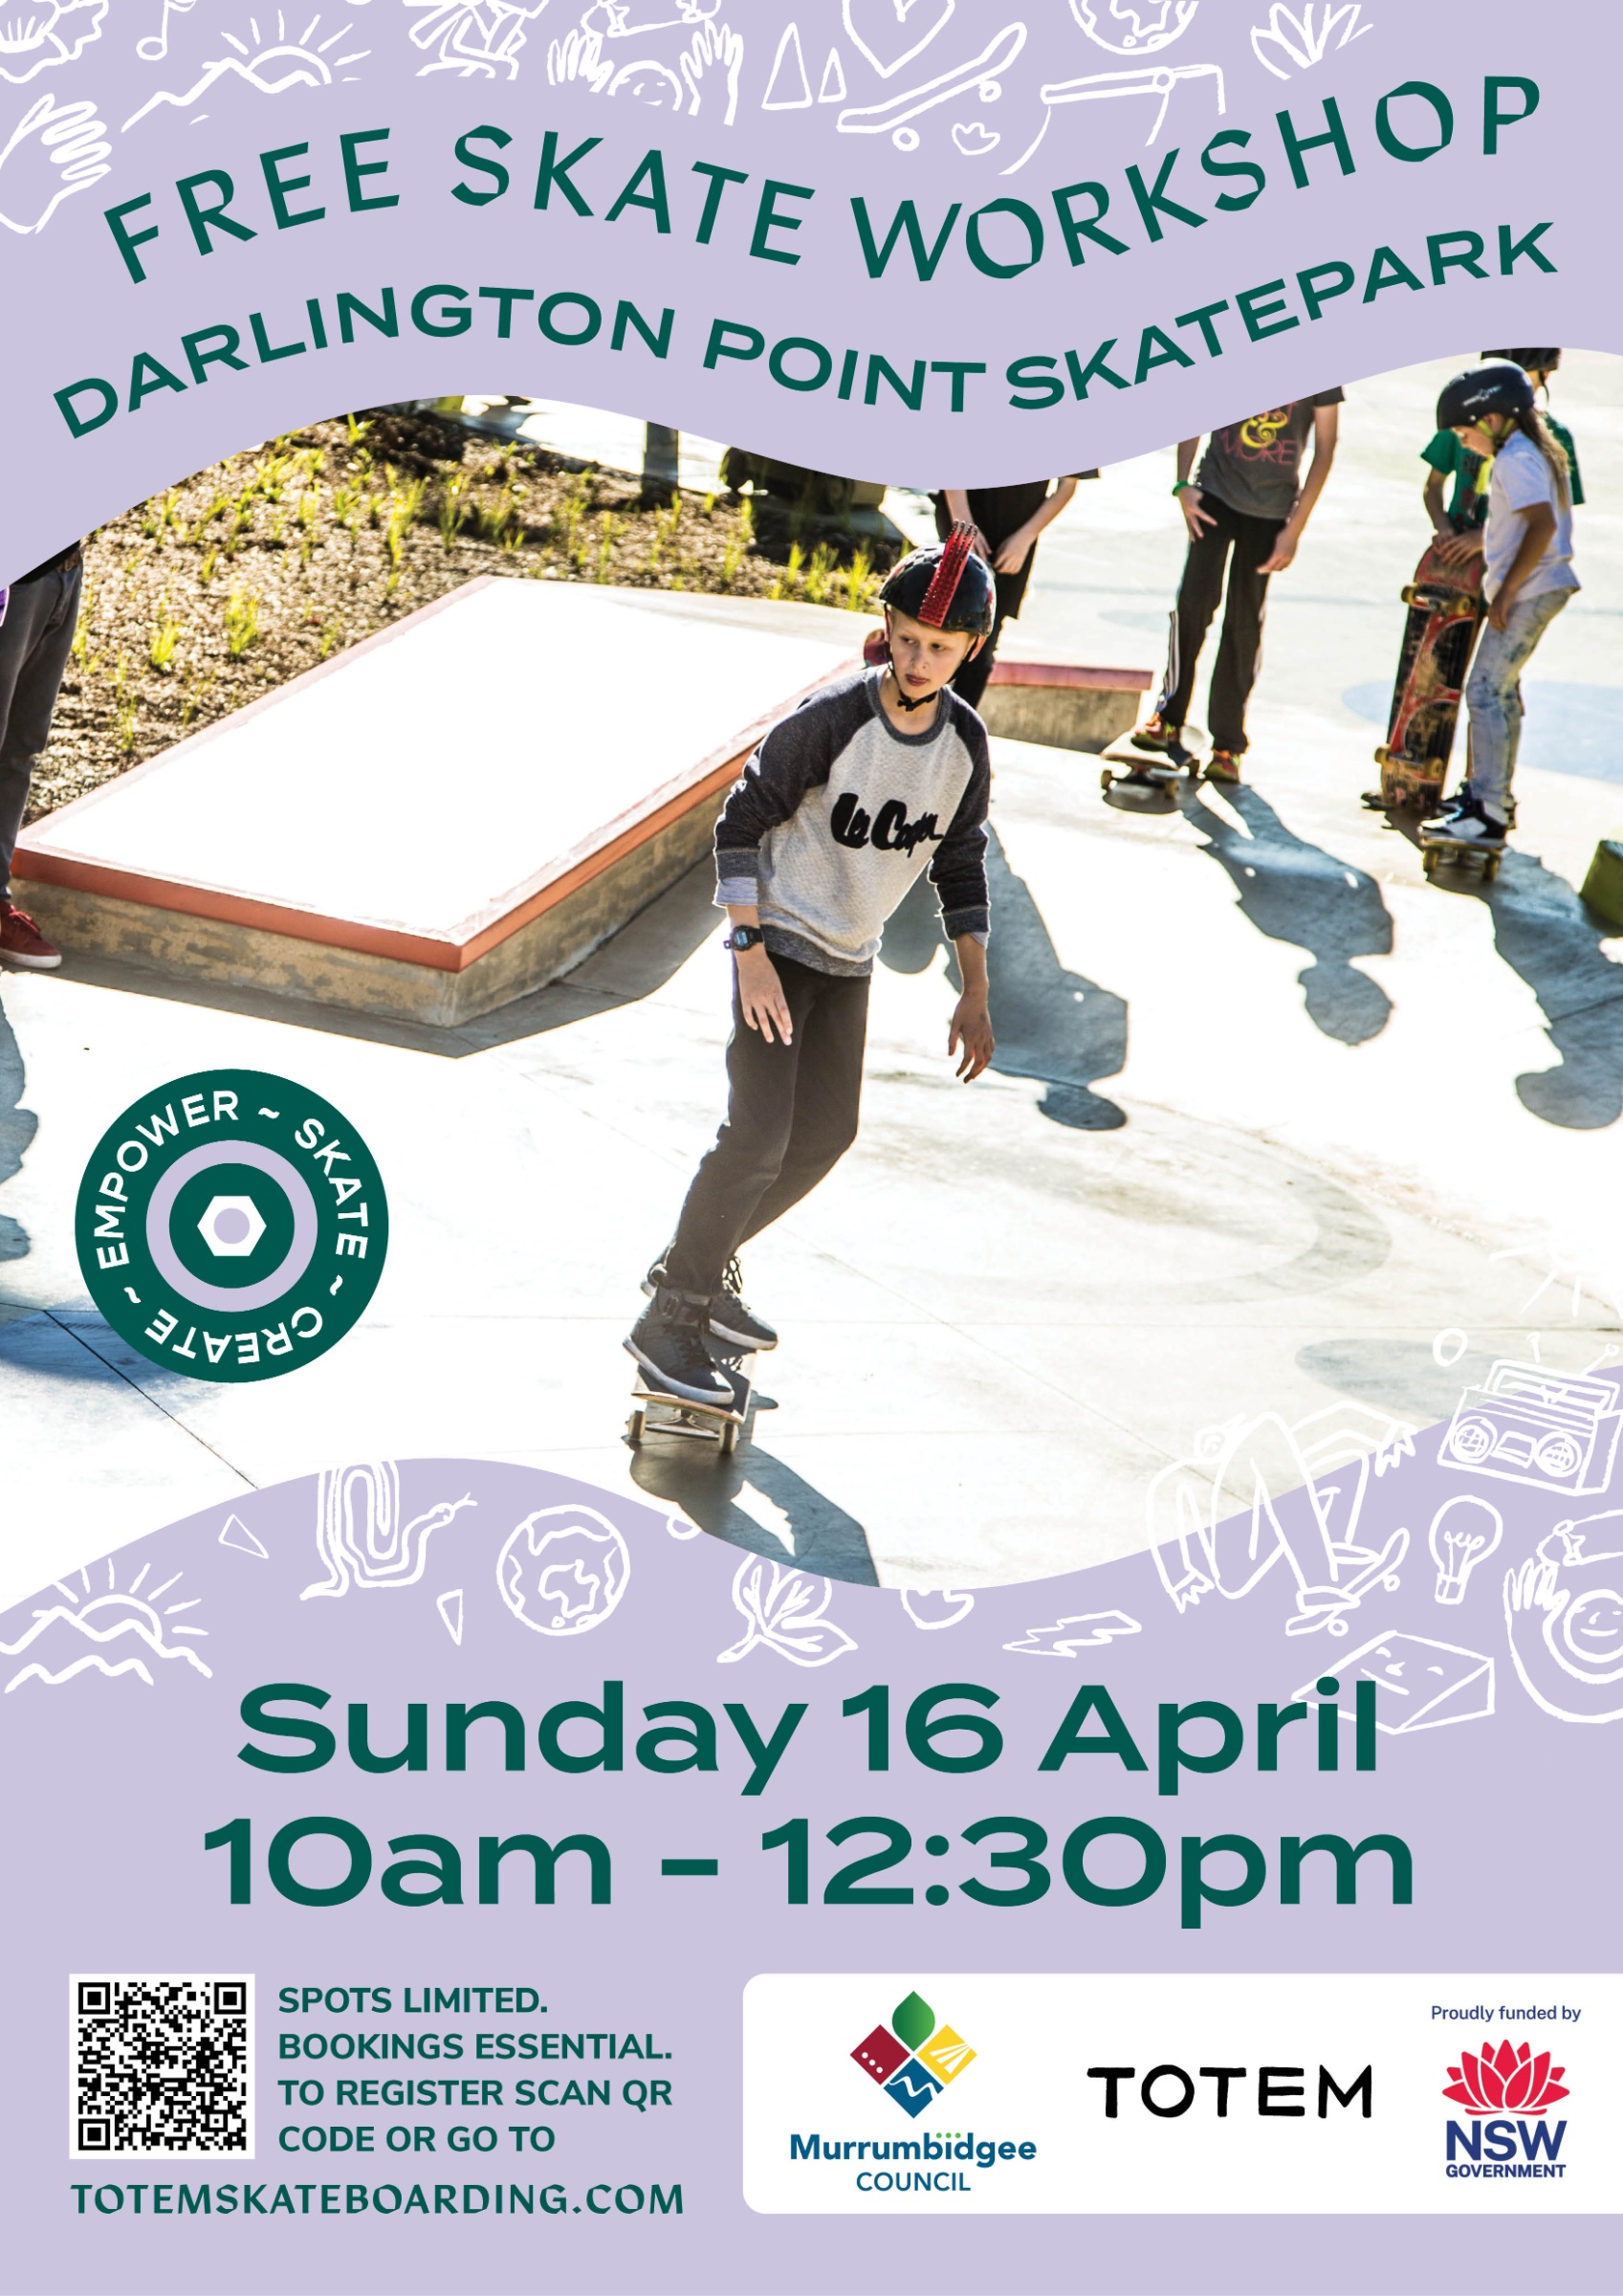 Free School Holiday Skate Workshop - Darlington Point - TIMECHANGE 11am